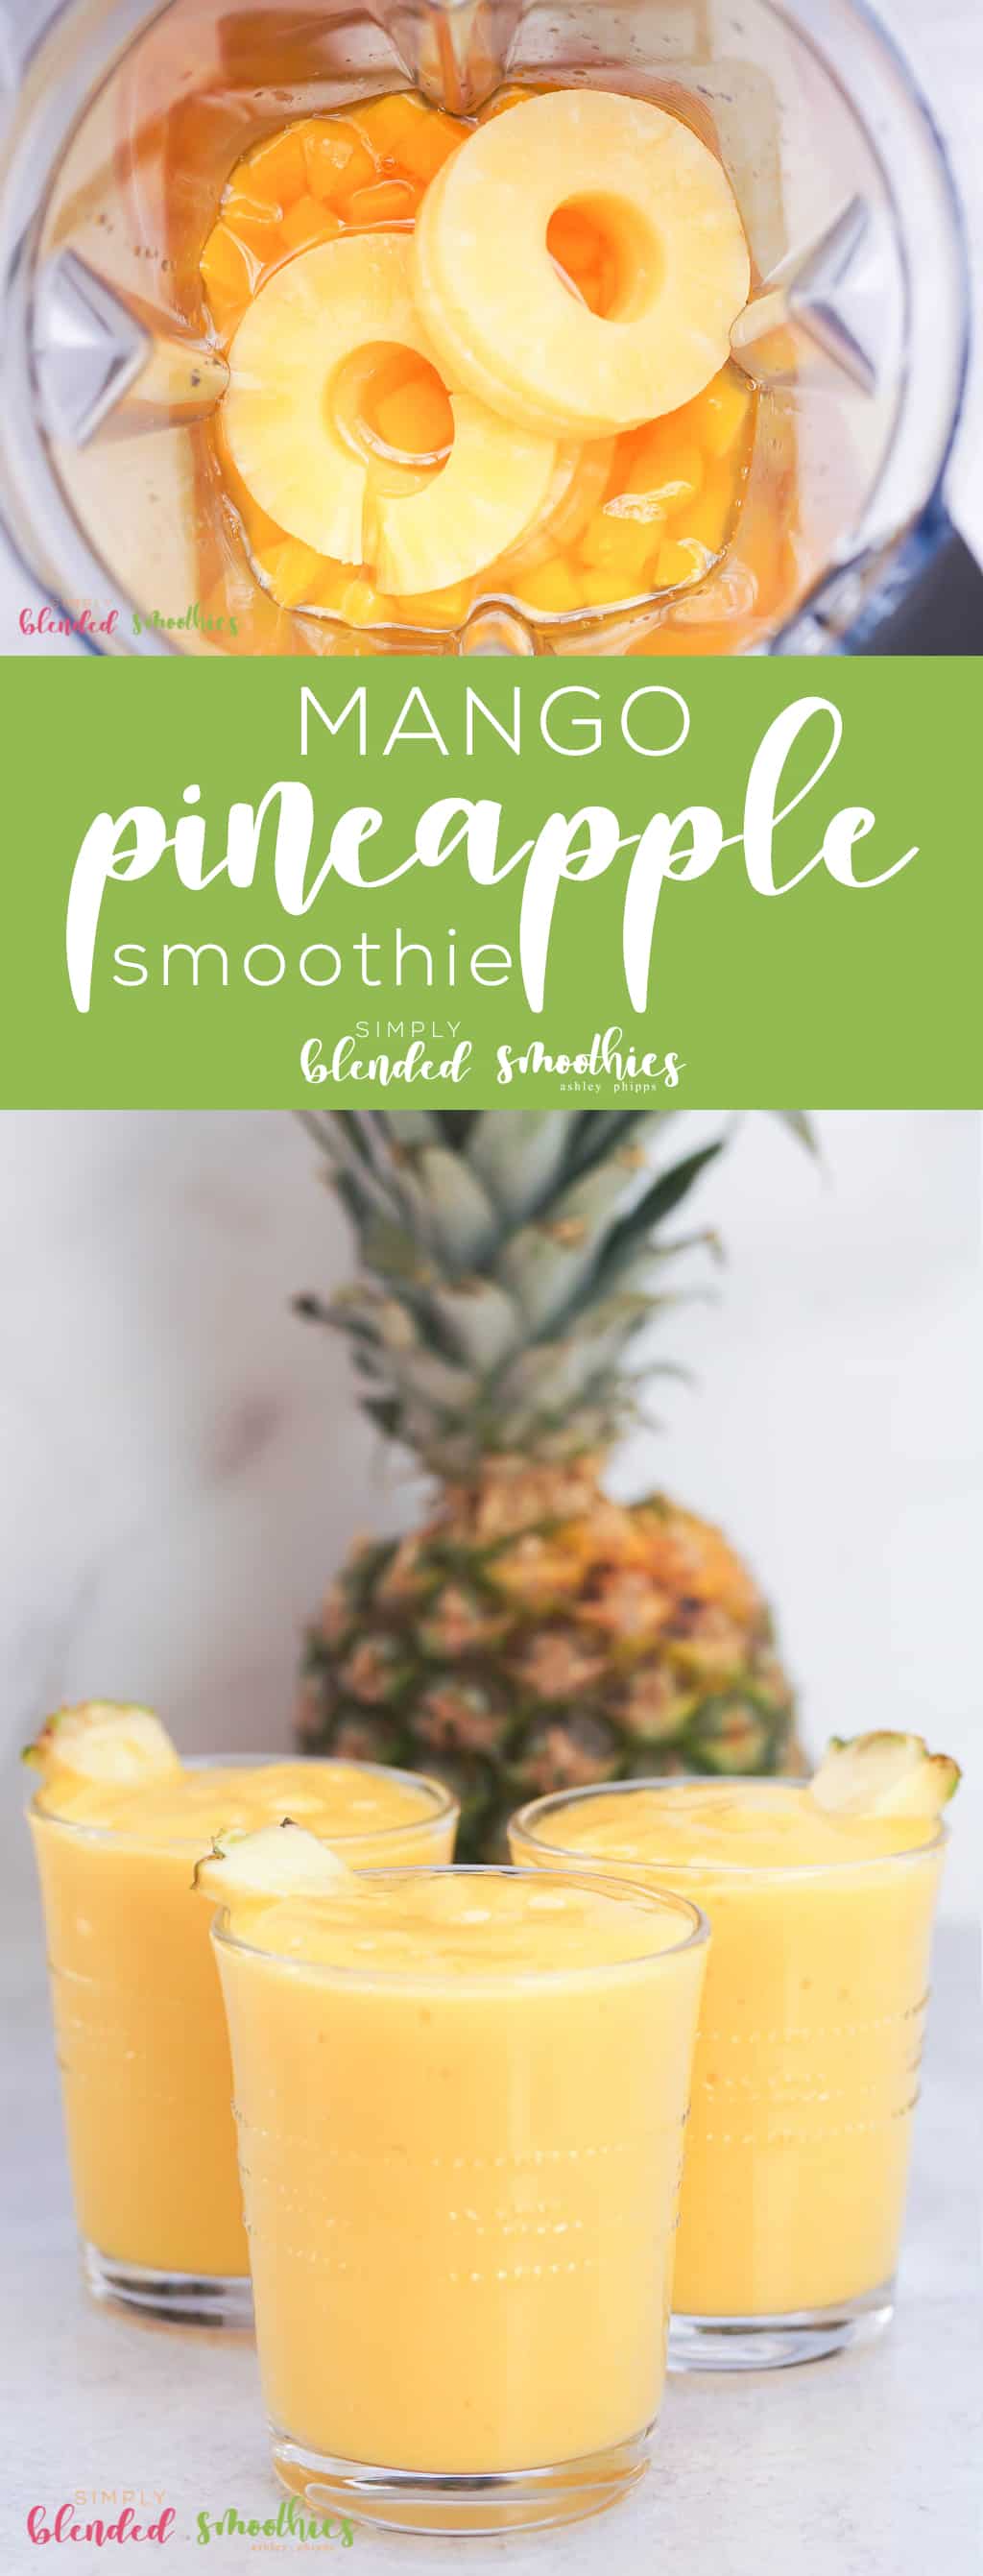 3 Ingredient Mango Pineapple Smoothie | Simply Blended Smoothies